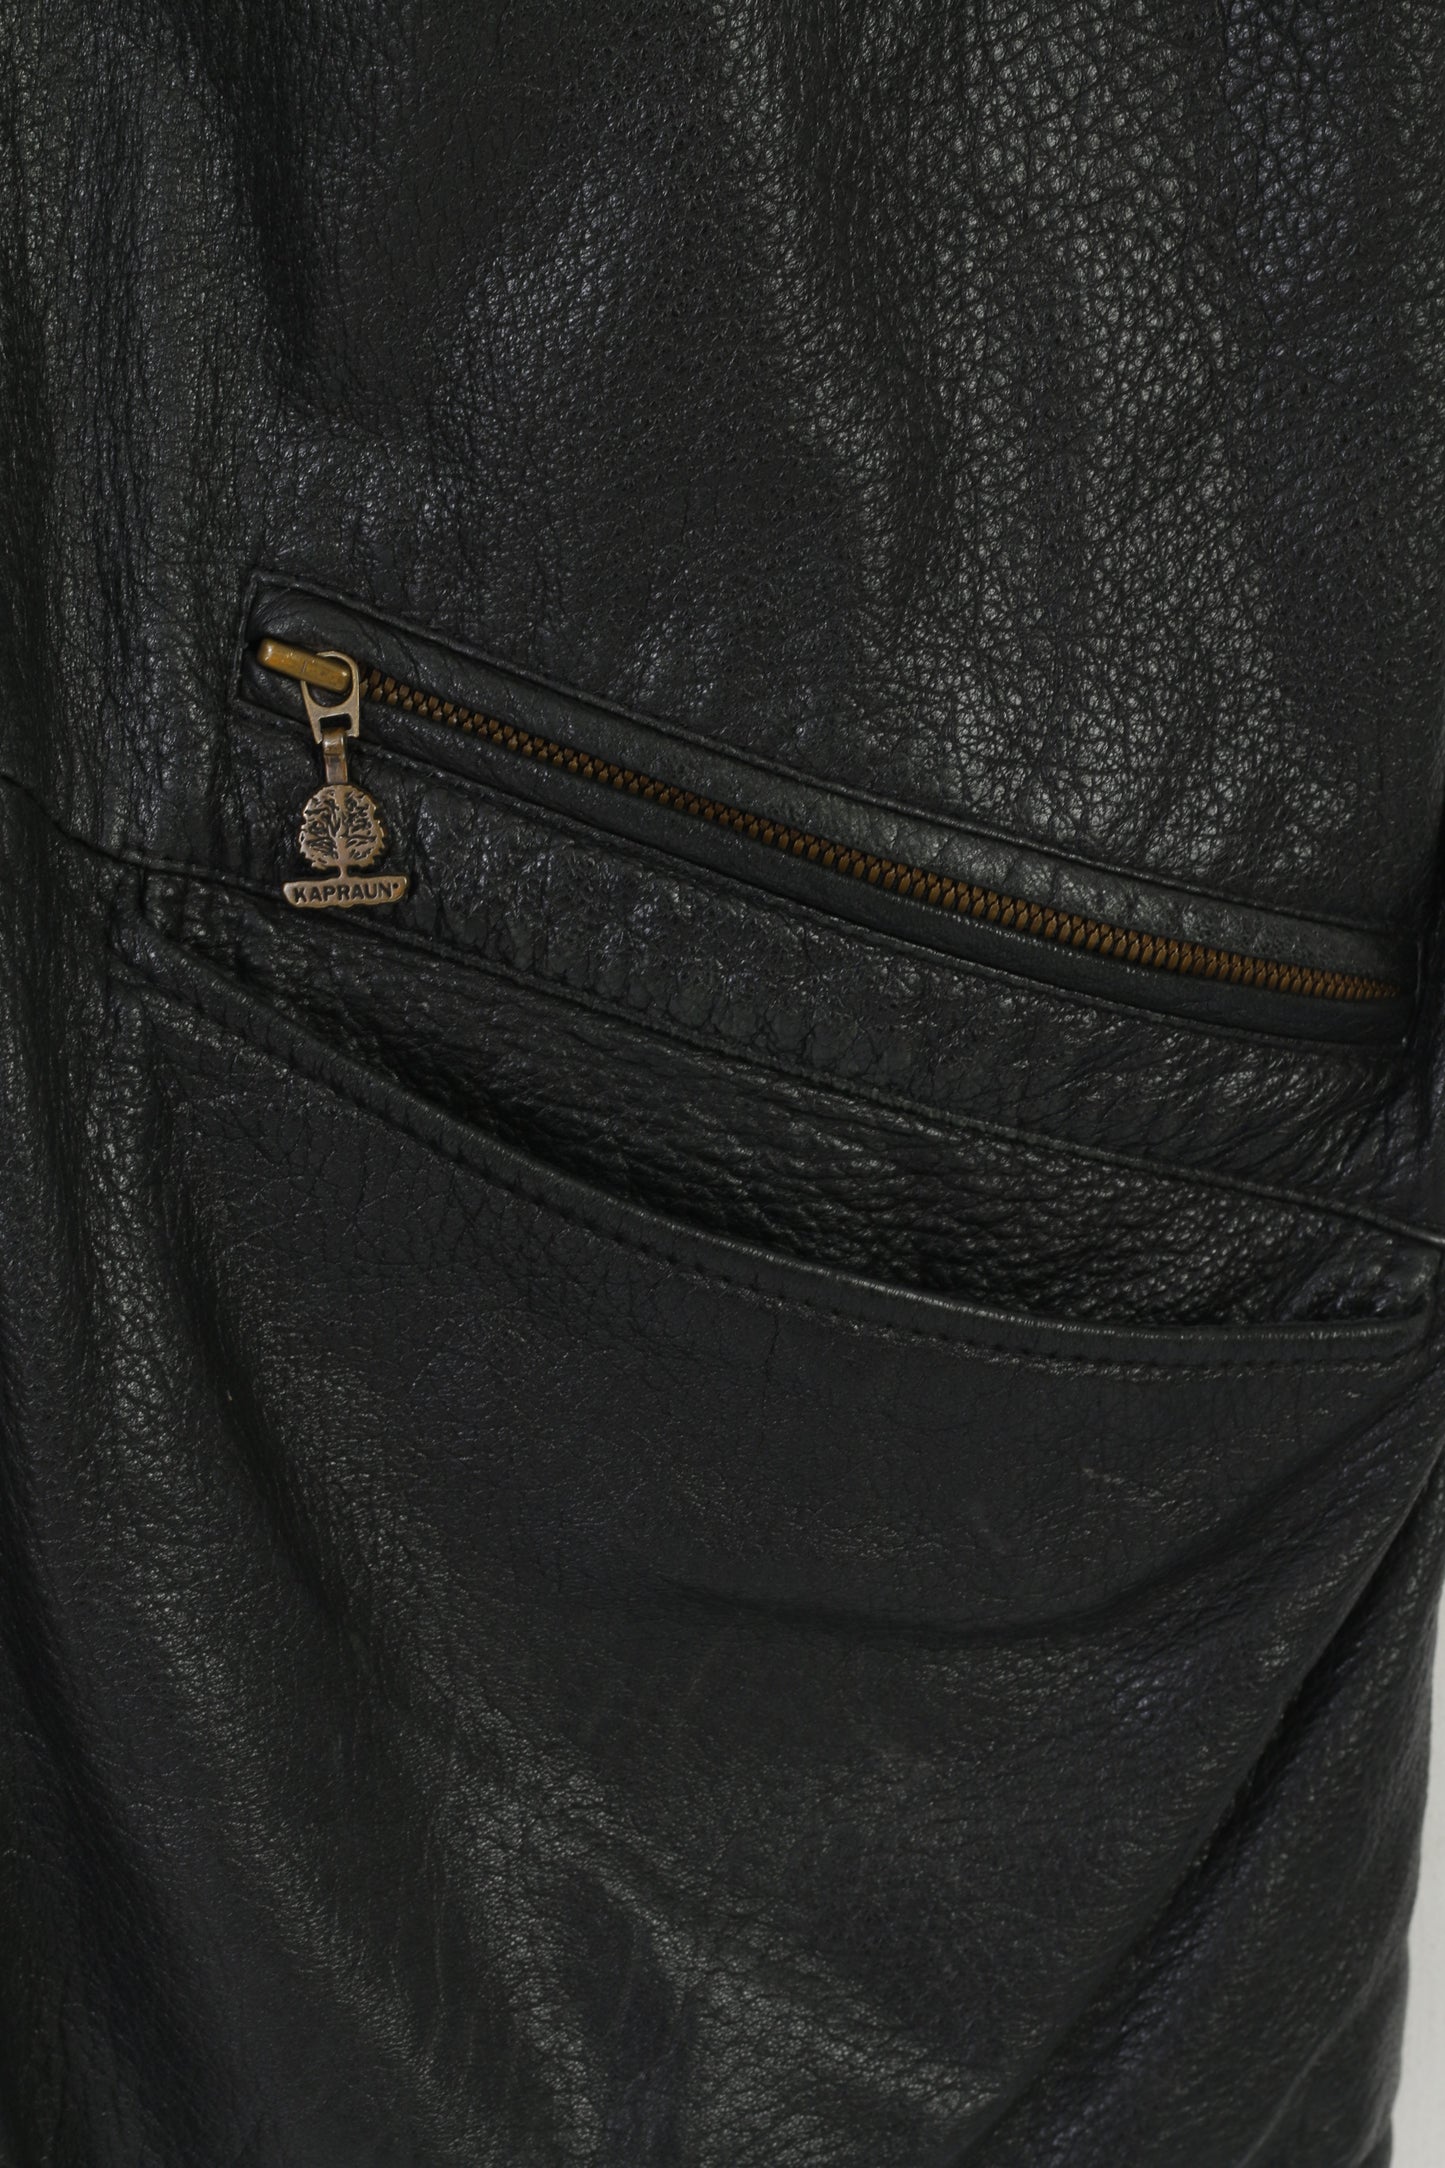 Kapraun Men XL Waistcoat Black Shiny Leather Buttoned Biker Merino Wool Lined Vest